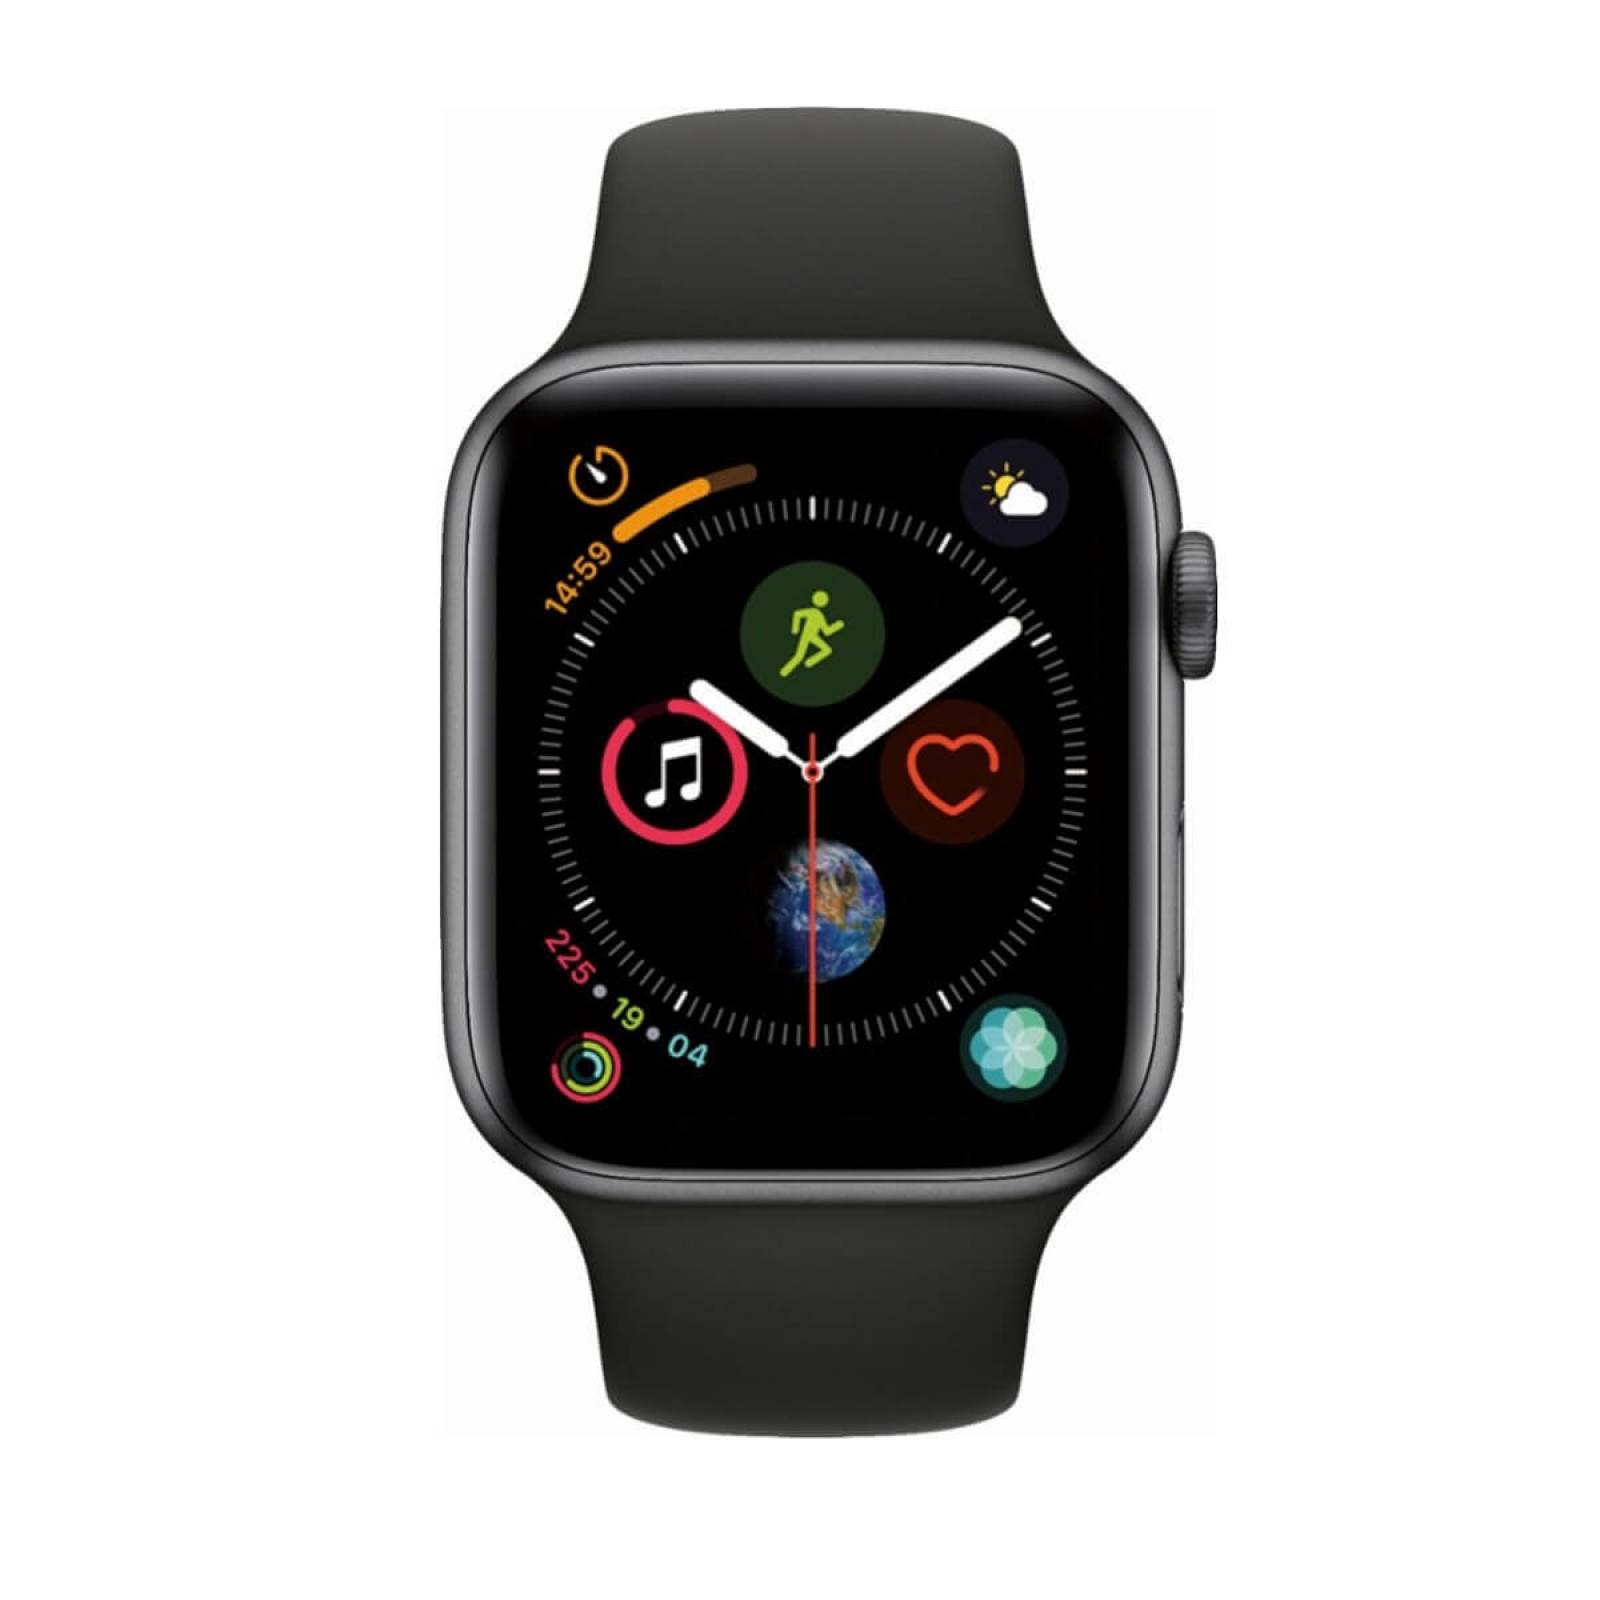 Apple Watch Series 4 Reloj Inteligente 44mm Nuevo Gps Gris oscuro